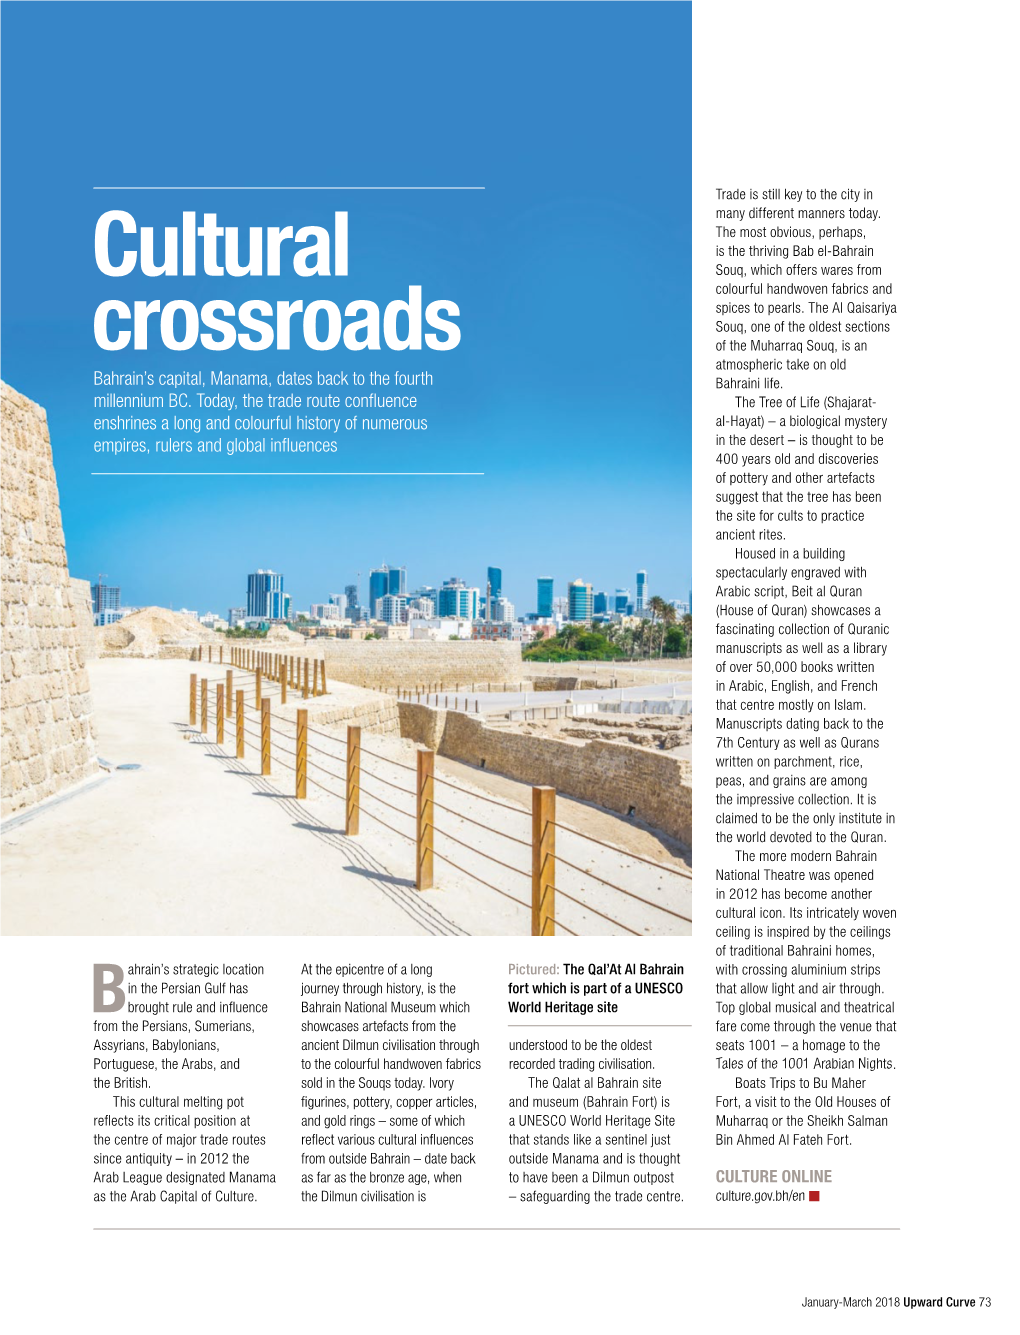 Cultural Crossroads